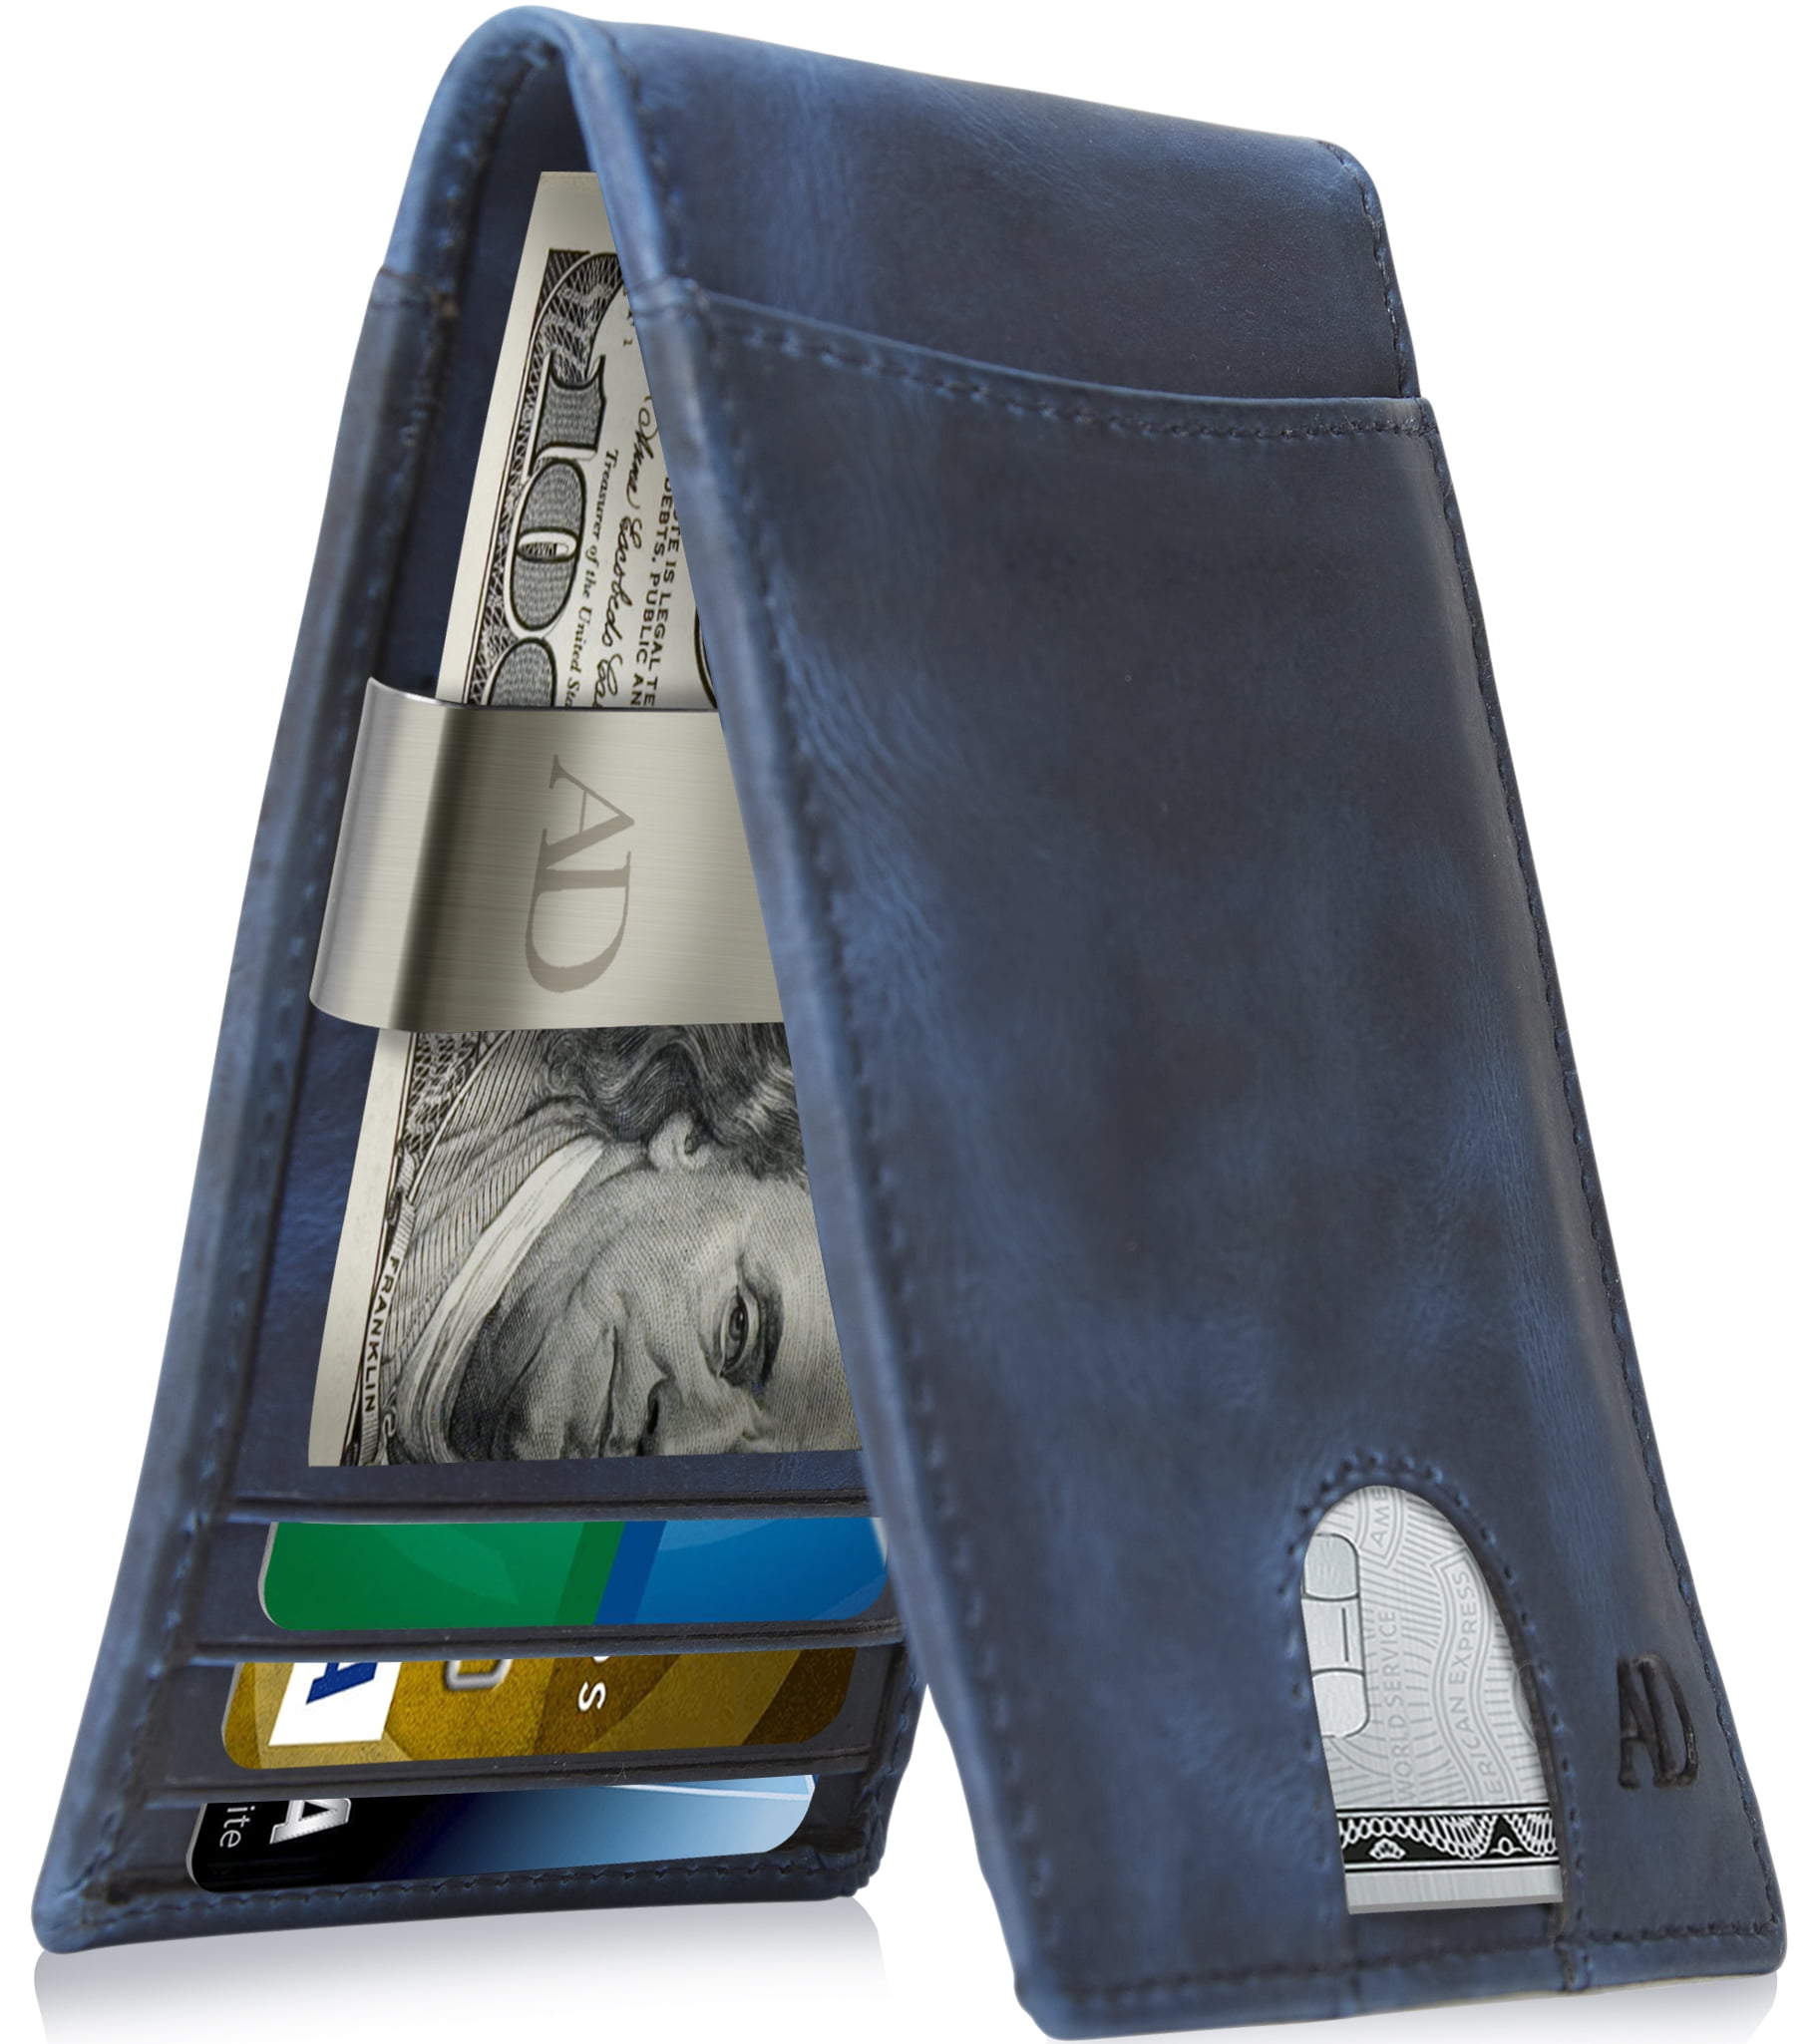 RUNBOX Wallet for Men Slim 11 Credit Card Holder Slots Leather RFID Blocking Small Thin Men's Wallet Bifold Minimalist Front Pocket Large Capacity